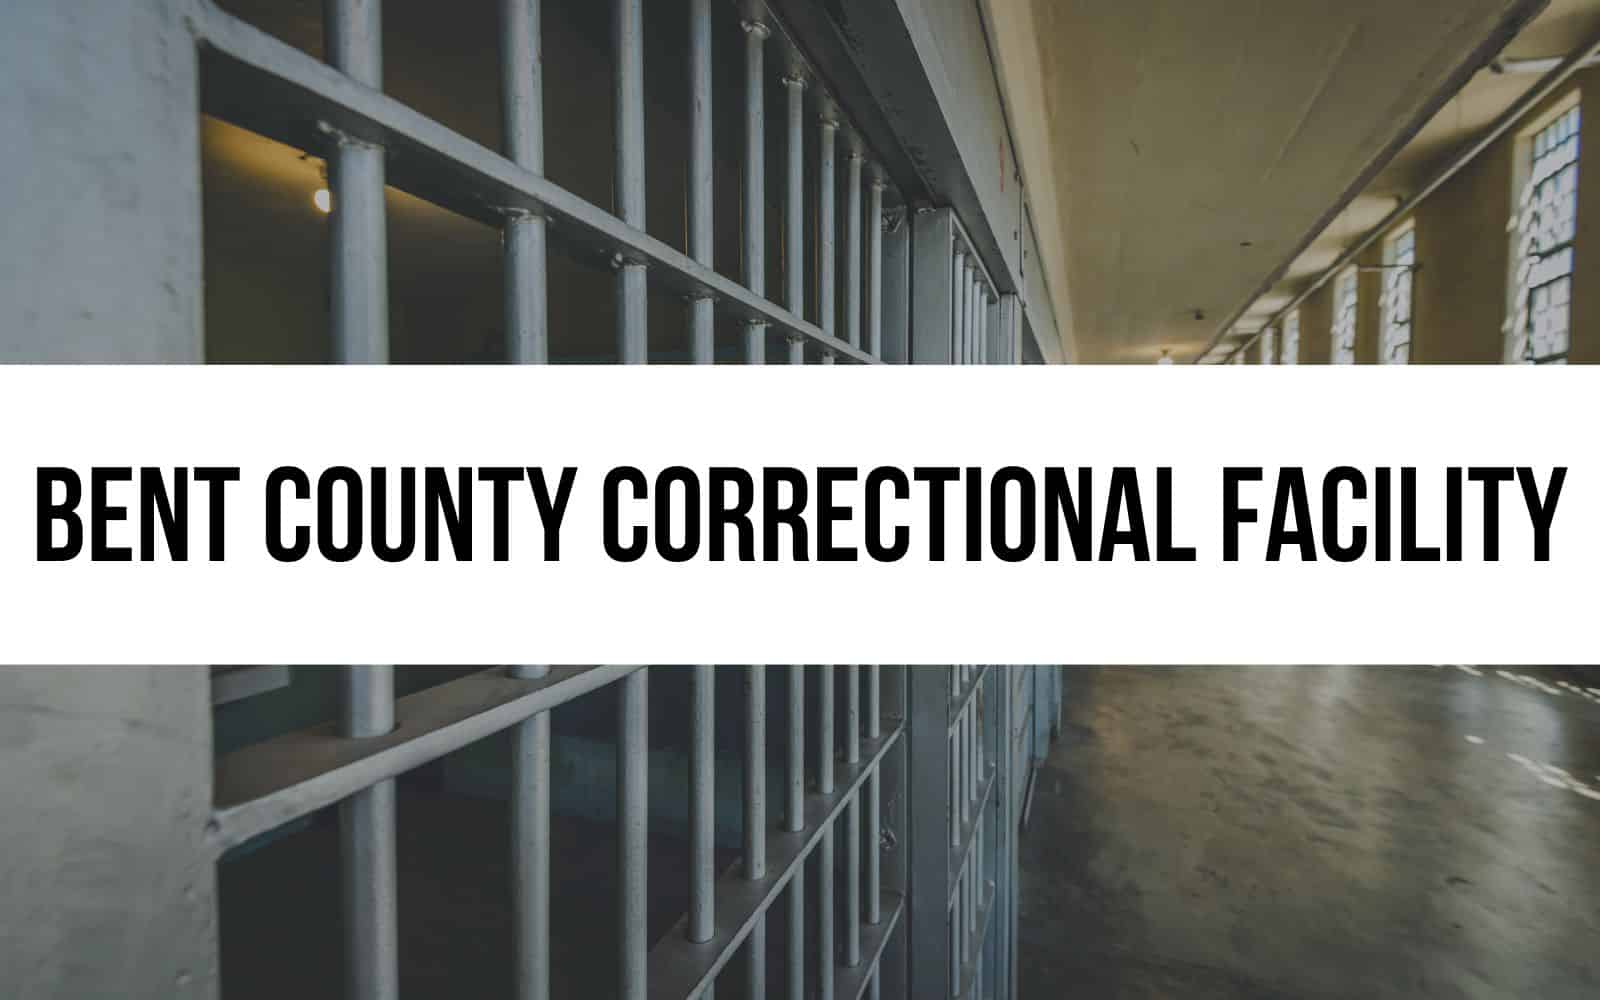 Bent County Correctional Facility